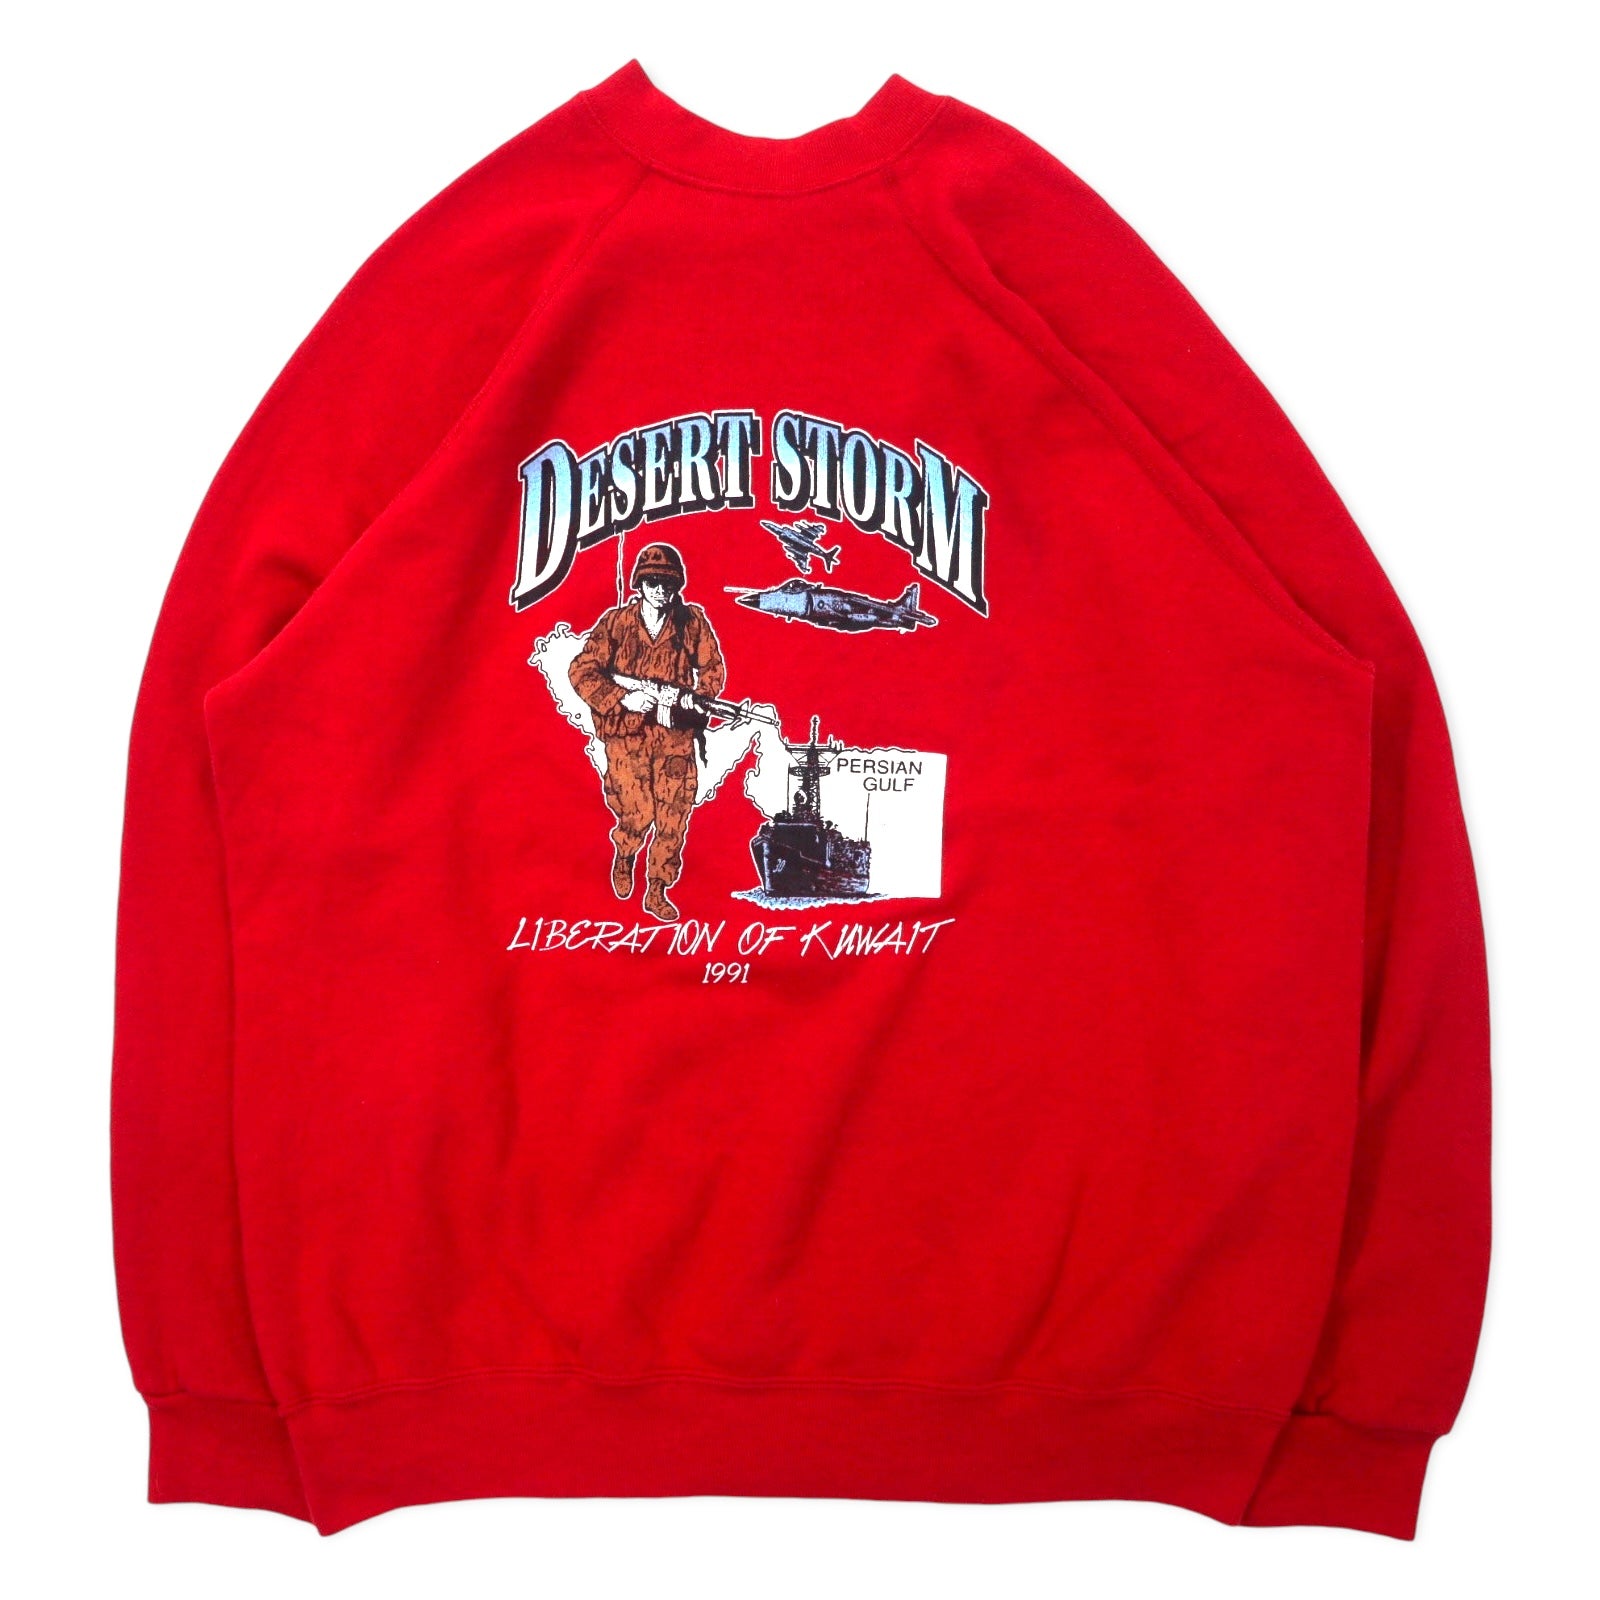 ARTEX USA Made 90's Print Sweatshirt XL Red Cotton brushed lining 